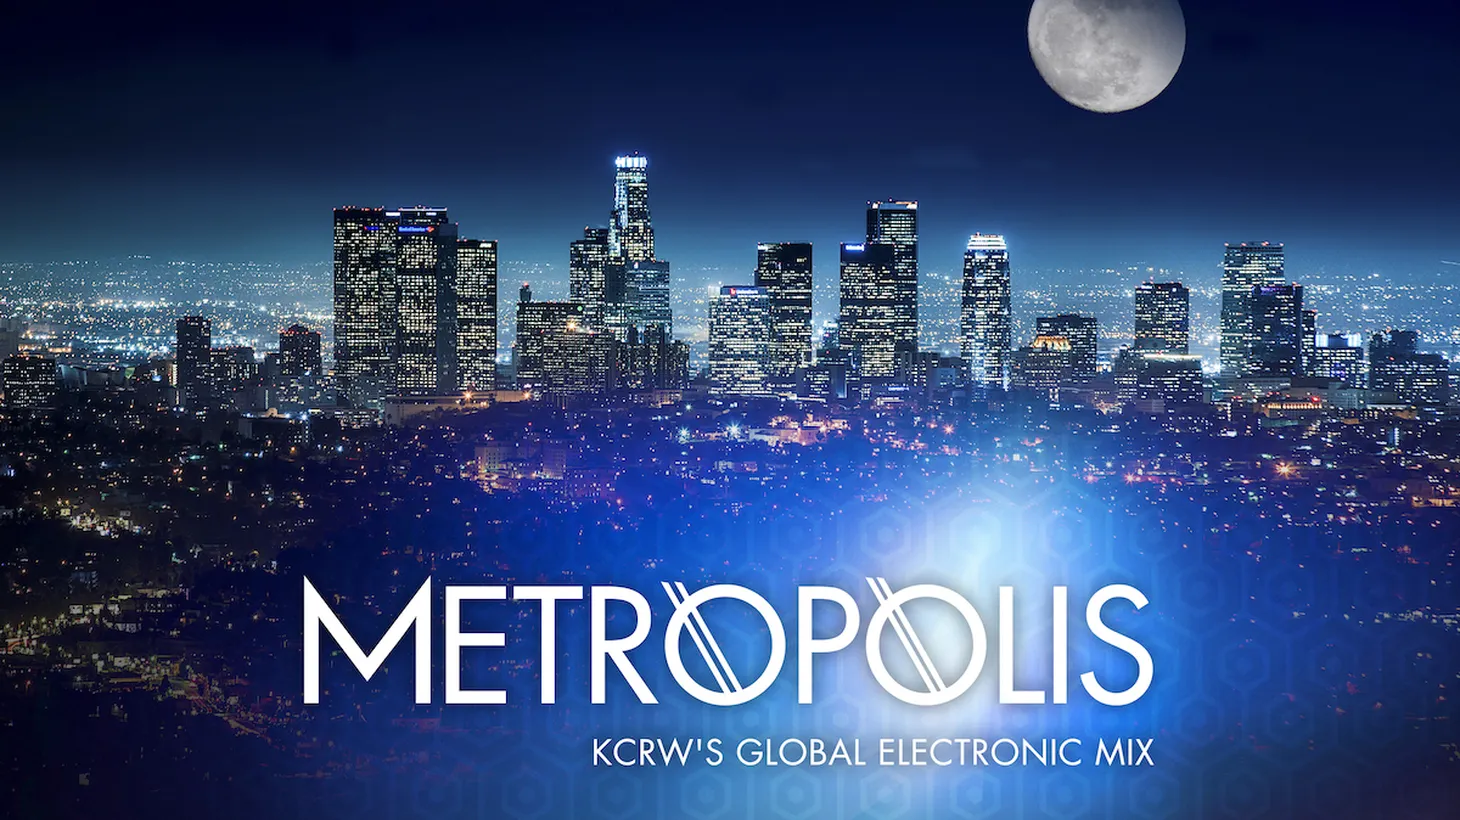 Metropolis playlist, February 26, 2022.